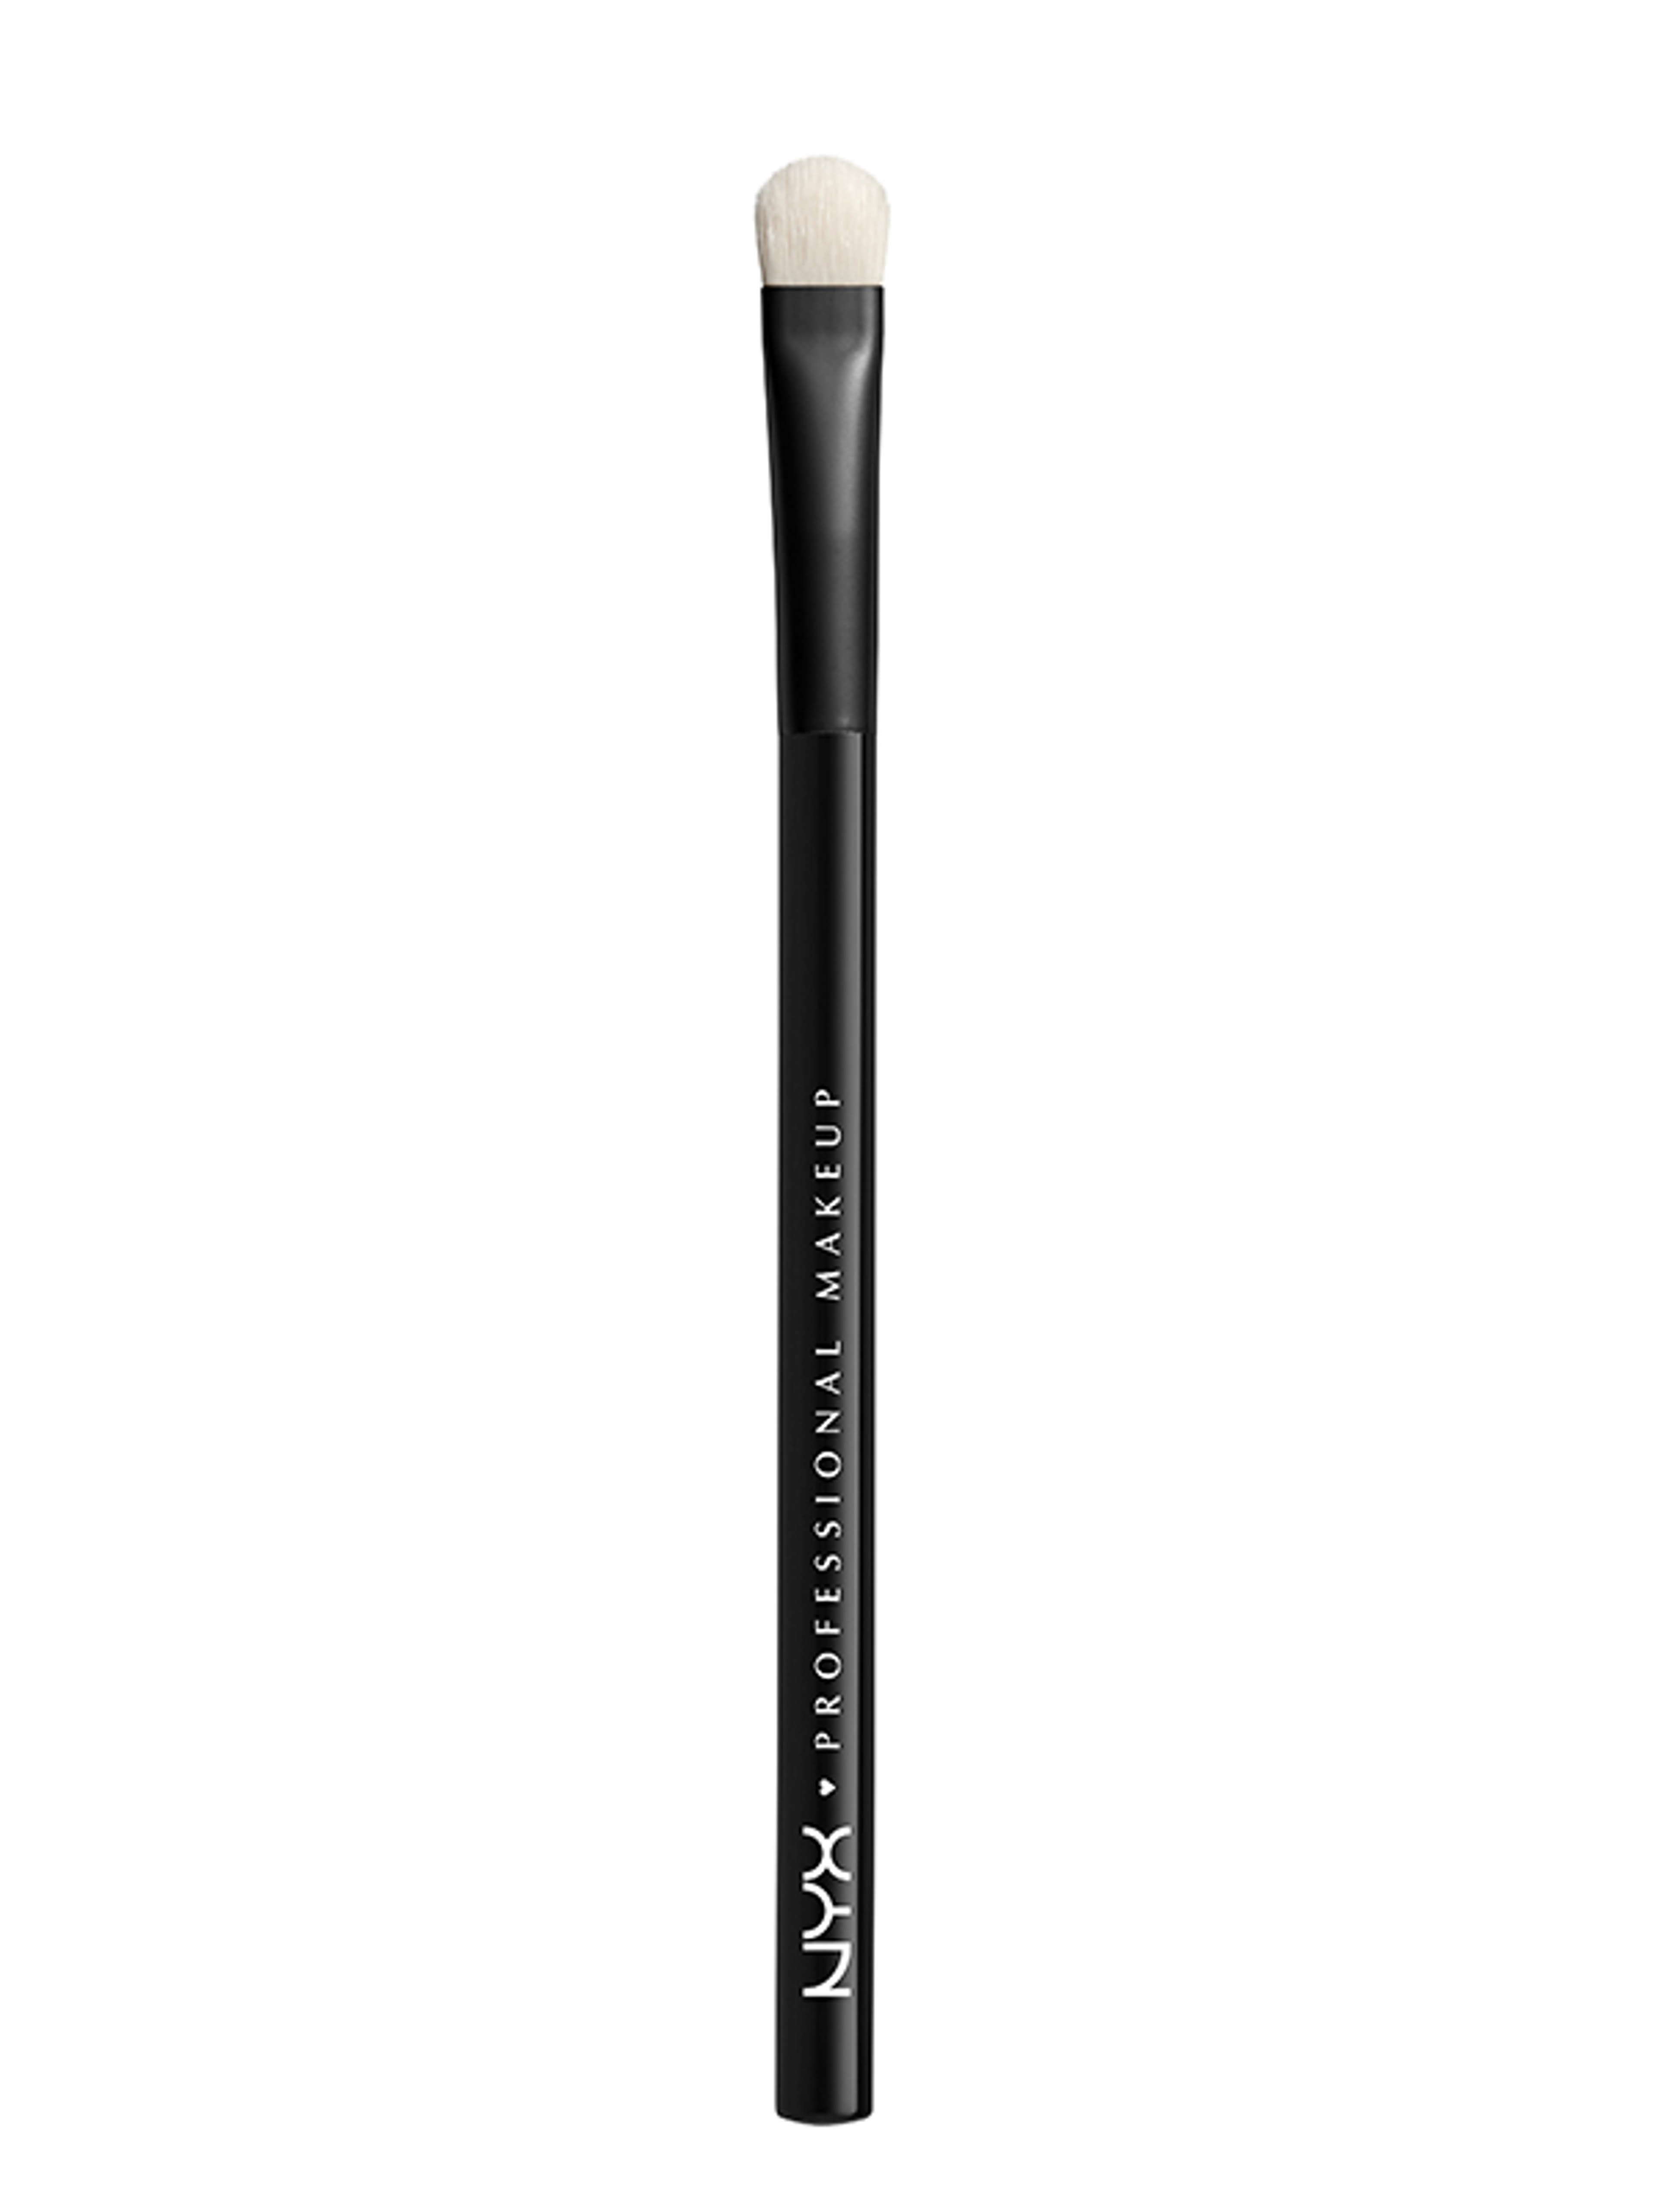 NYX Professional Makeup Pro Brush szemhéj ecset /Smudging - 1 db-1